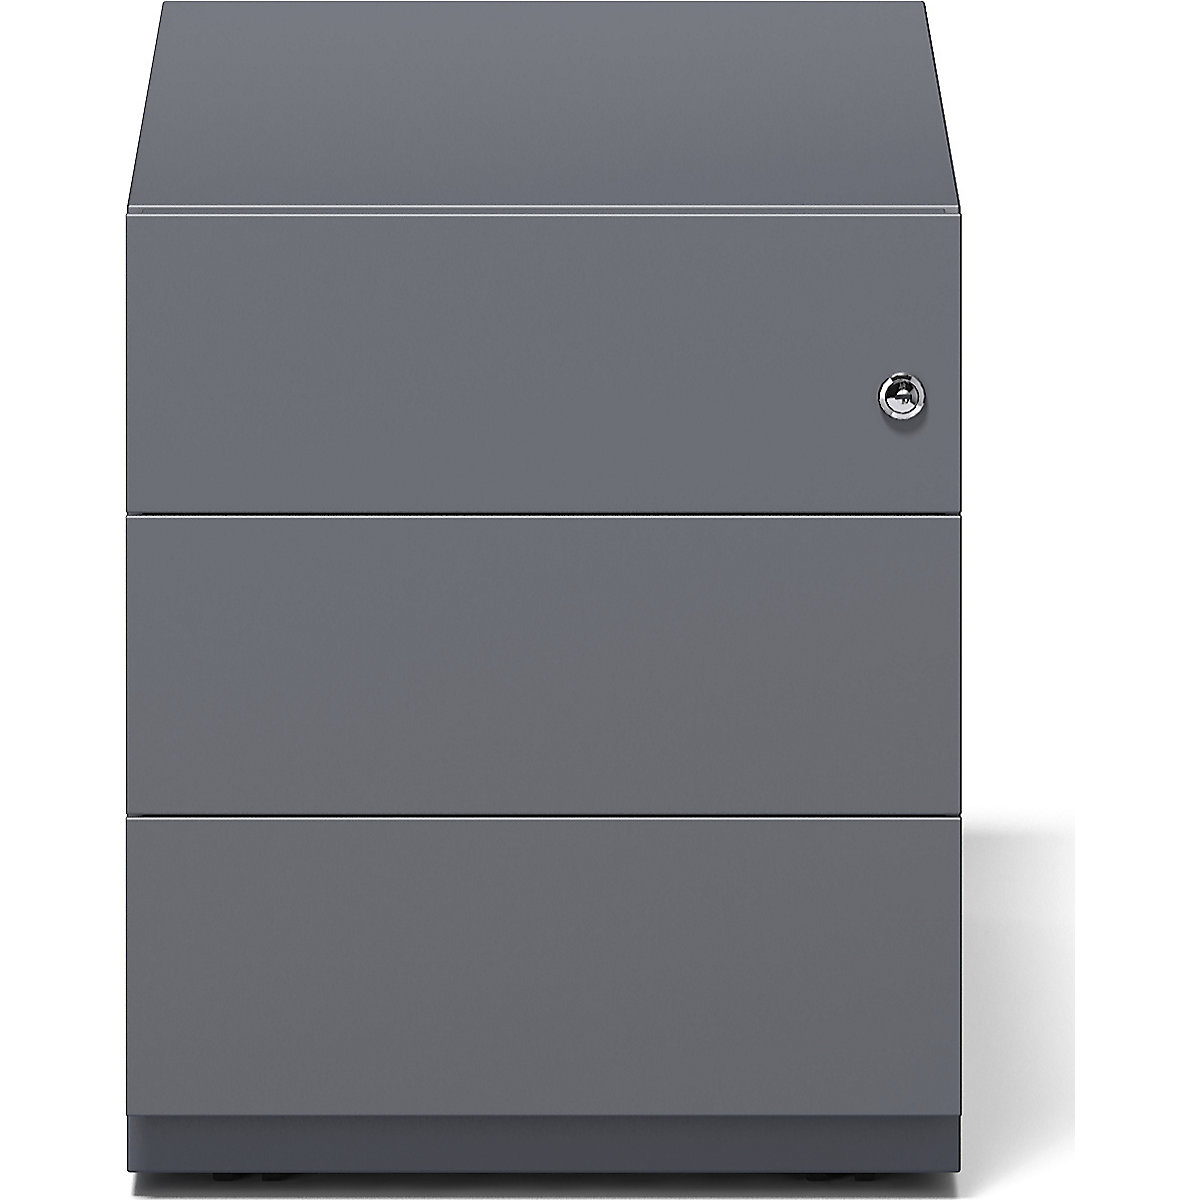 Pojazdný kontajner Note™, s 3 univerzálnymi zásuvkami – BISLEY (Zobrazenie produktu 17)-16